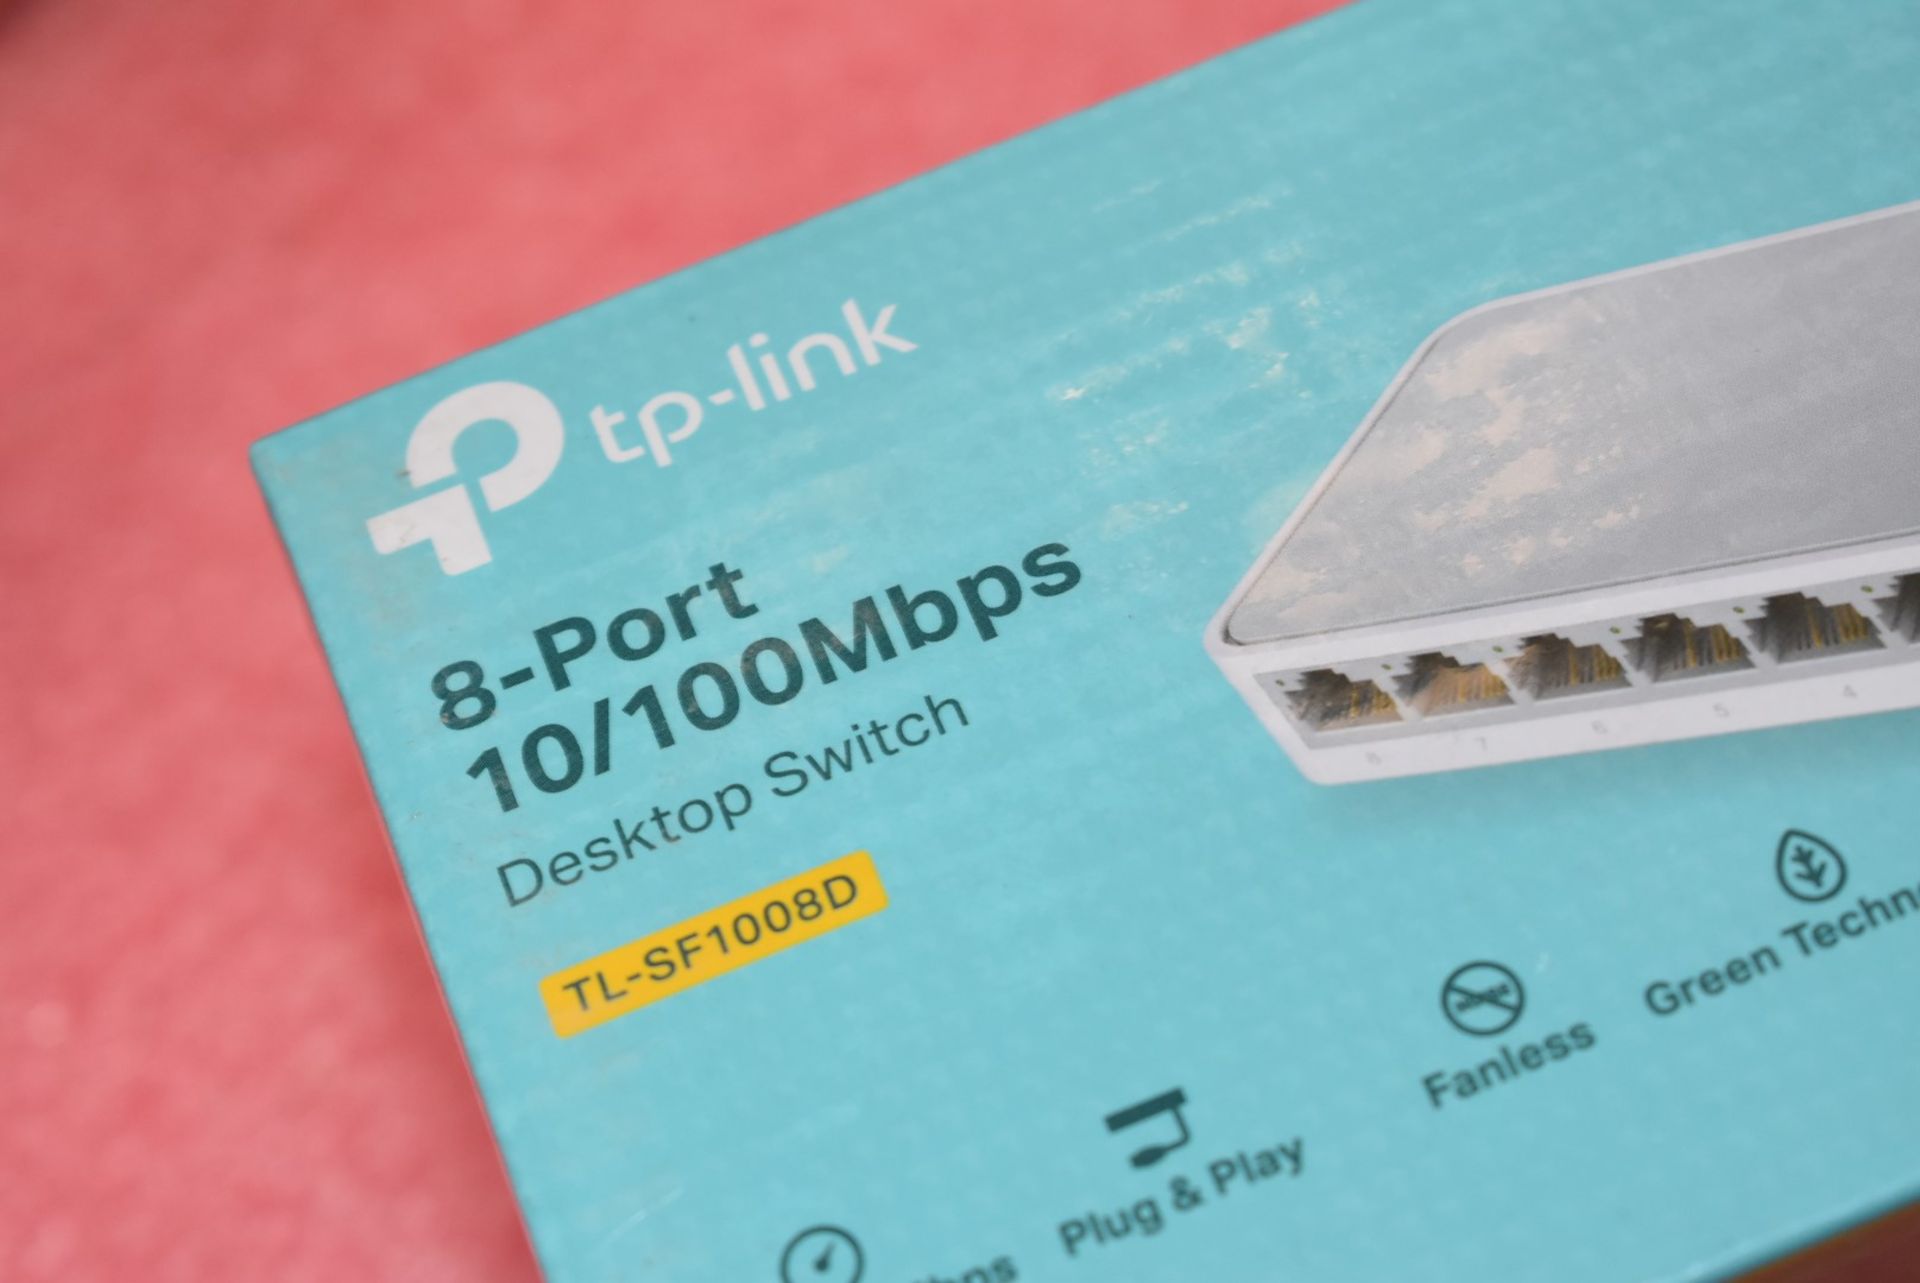 1 x TP Link 8 Port 10/100Mbos Desktop Switch - Model TL-SF1008D - New Sealed Stock - Image 5 of 5